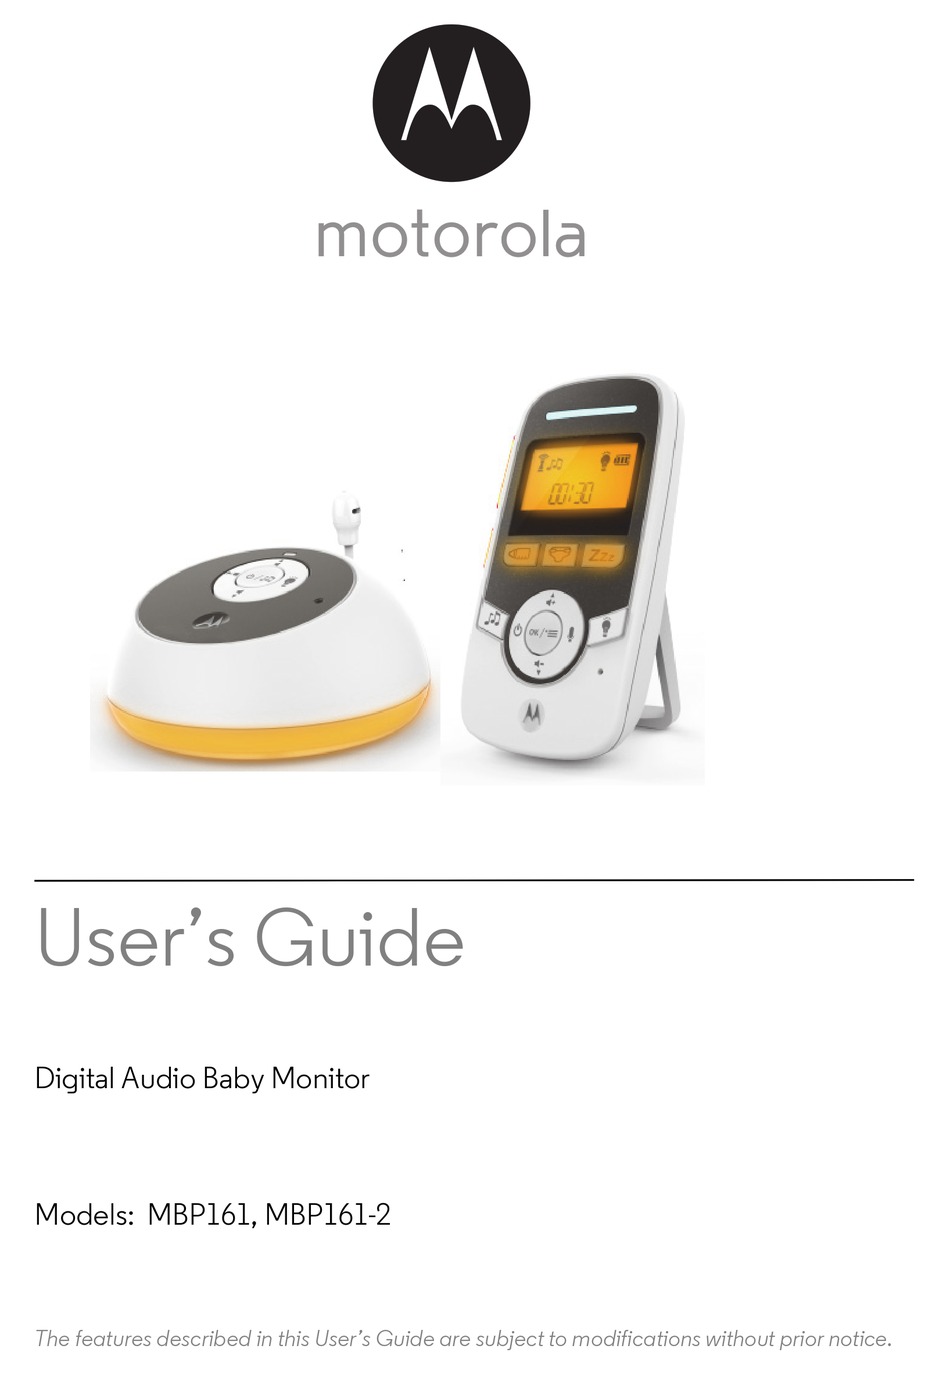 + B-Ware Motorola Audio Babyphone Motorola MBP161 mit 1.5” Display 